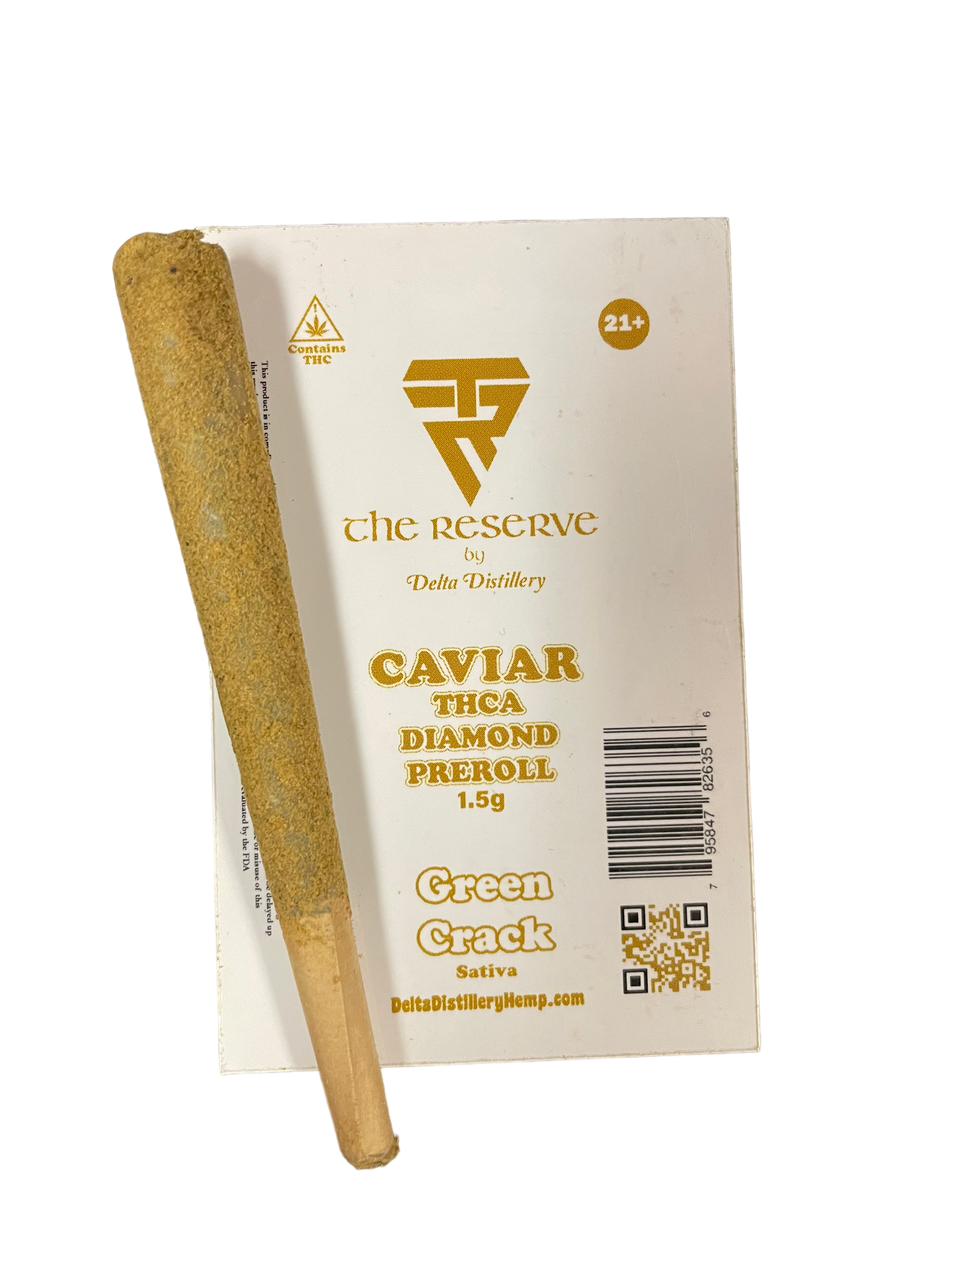 The Reserve Caviar THA-A Diamond Pre-roll